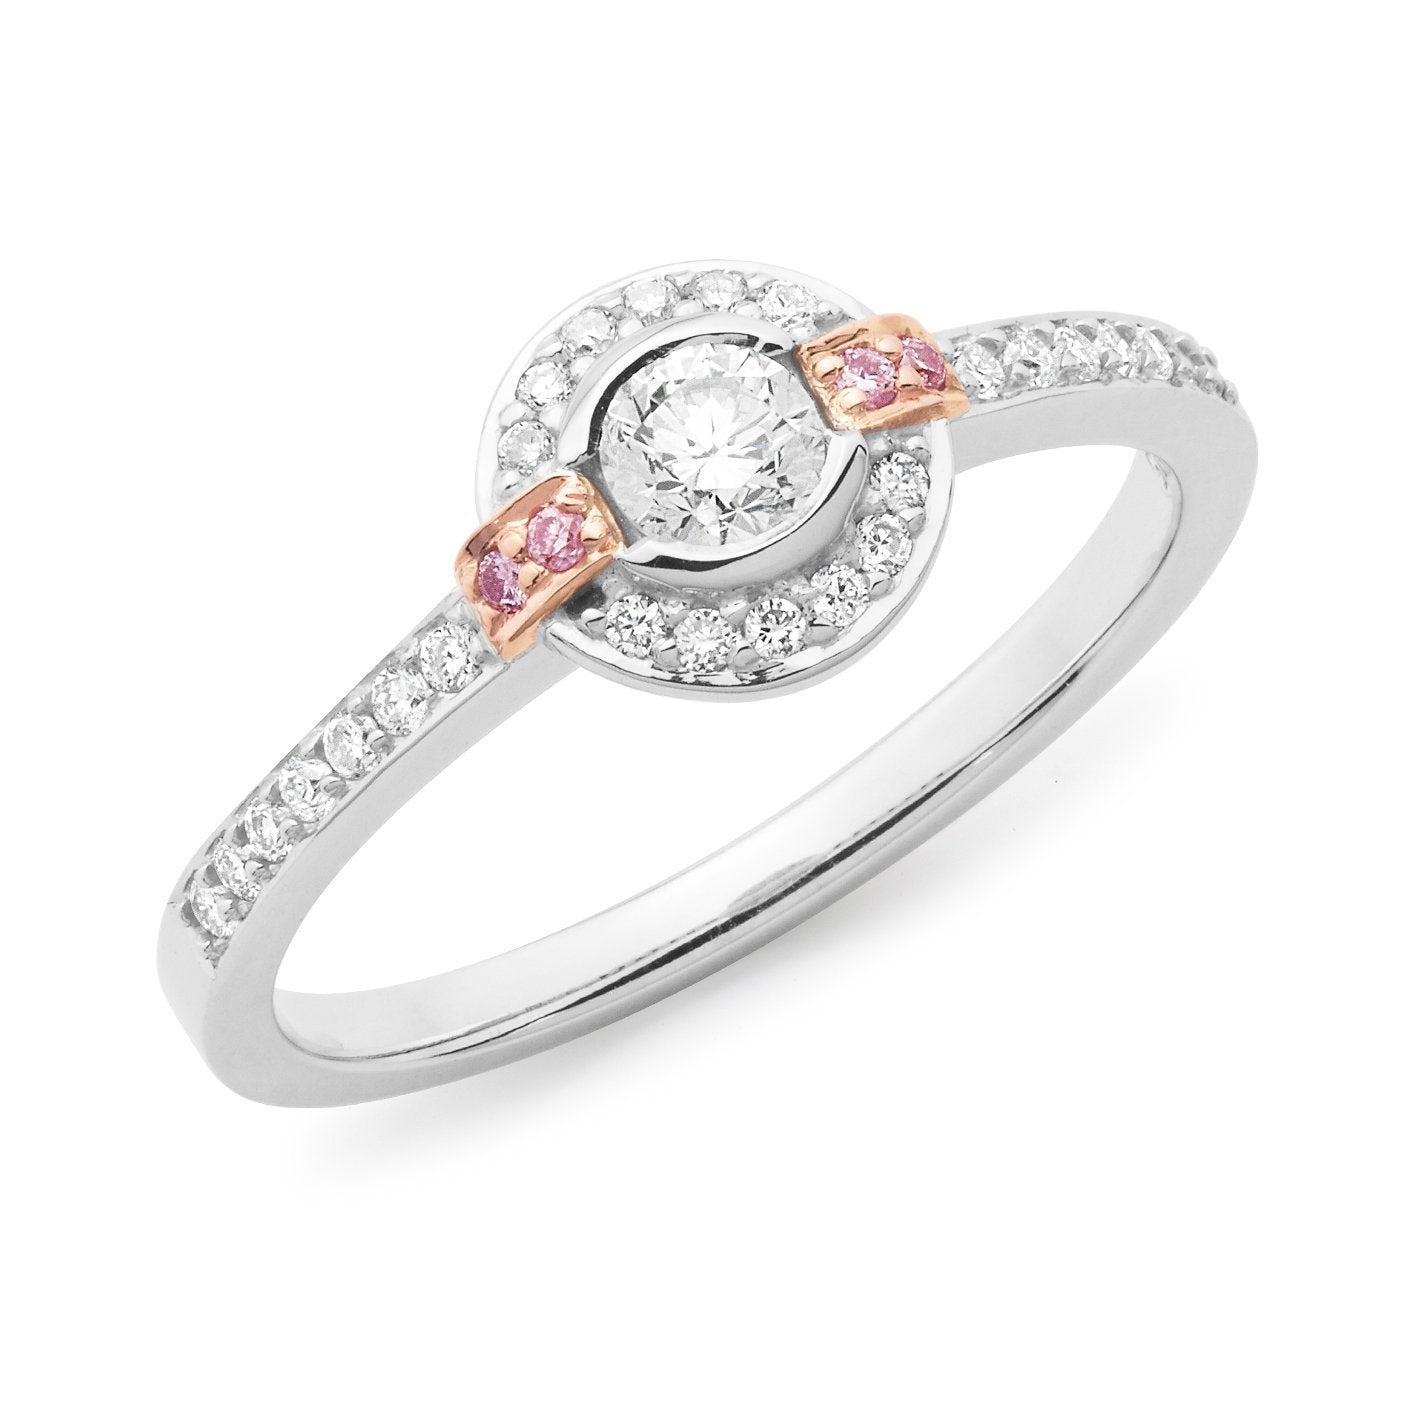 PINK CAVIAR 0.35ct Pink Diamond Ring in 18ct White & Rose Gold